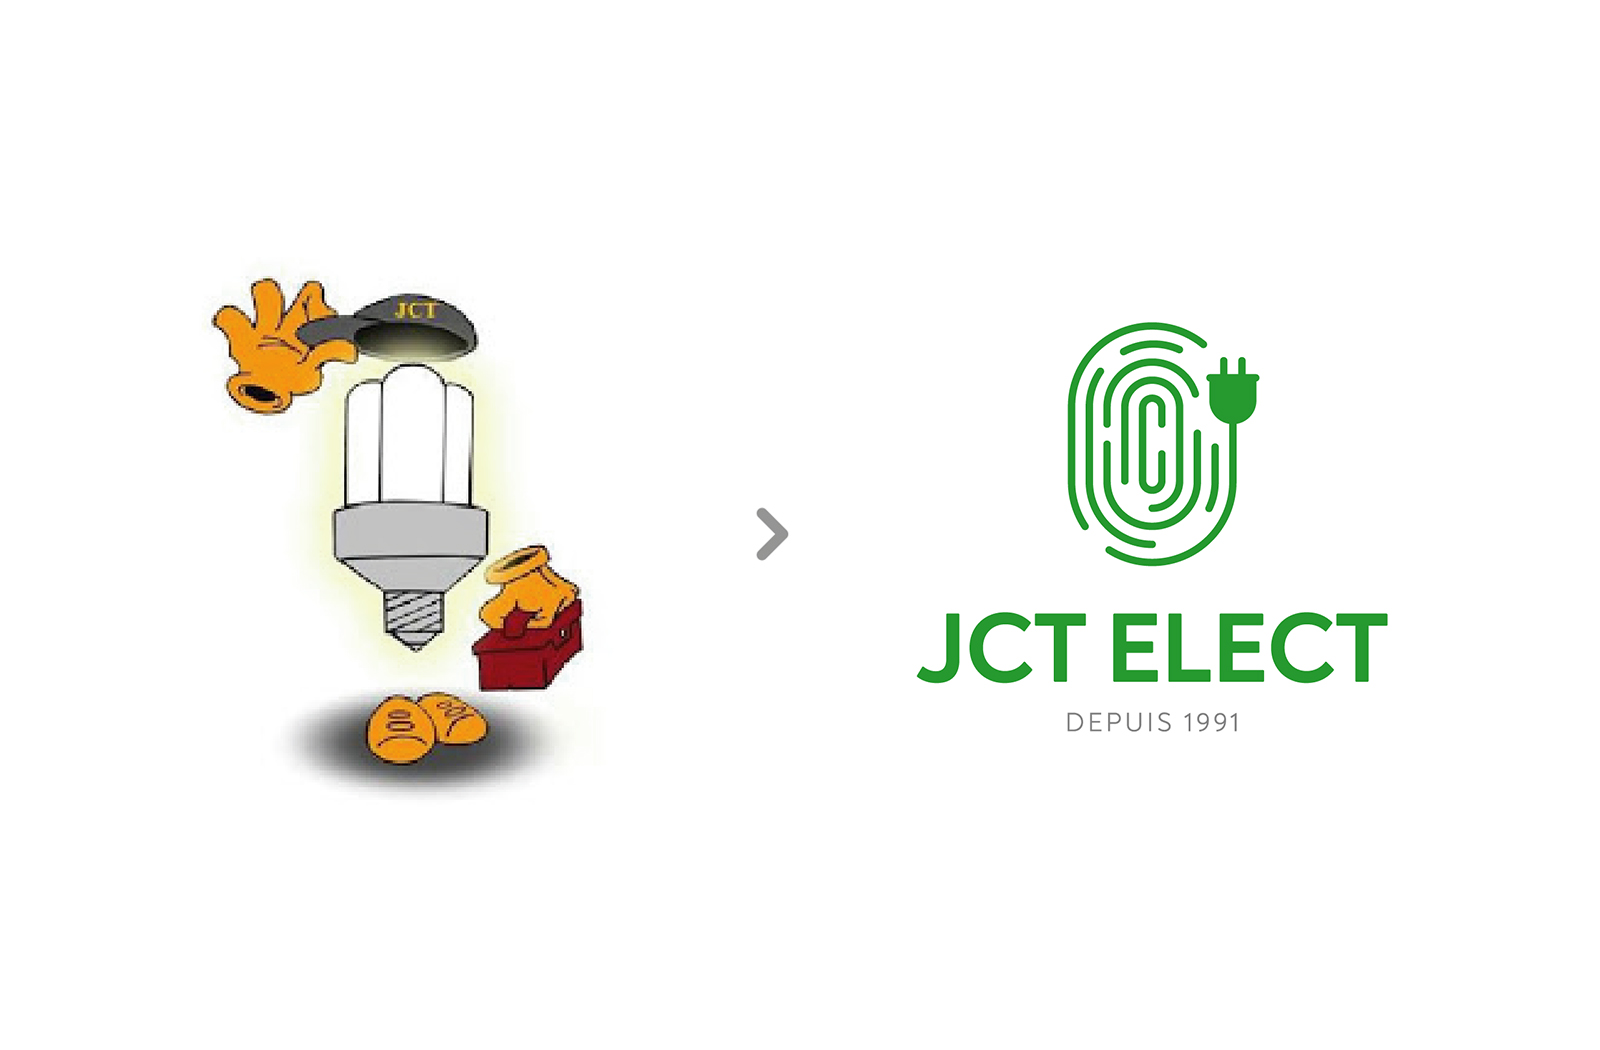 Présentation du projet Jct Elect